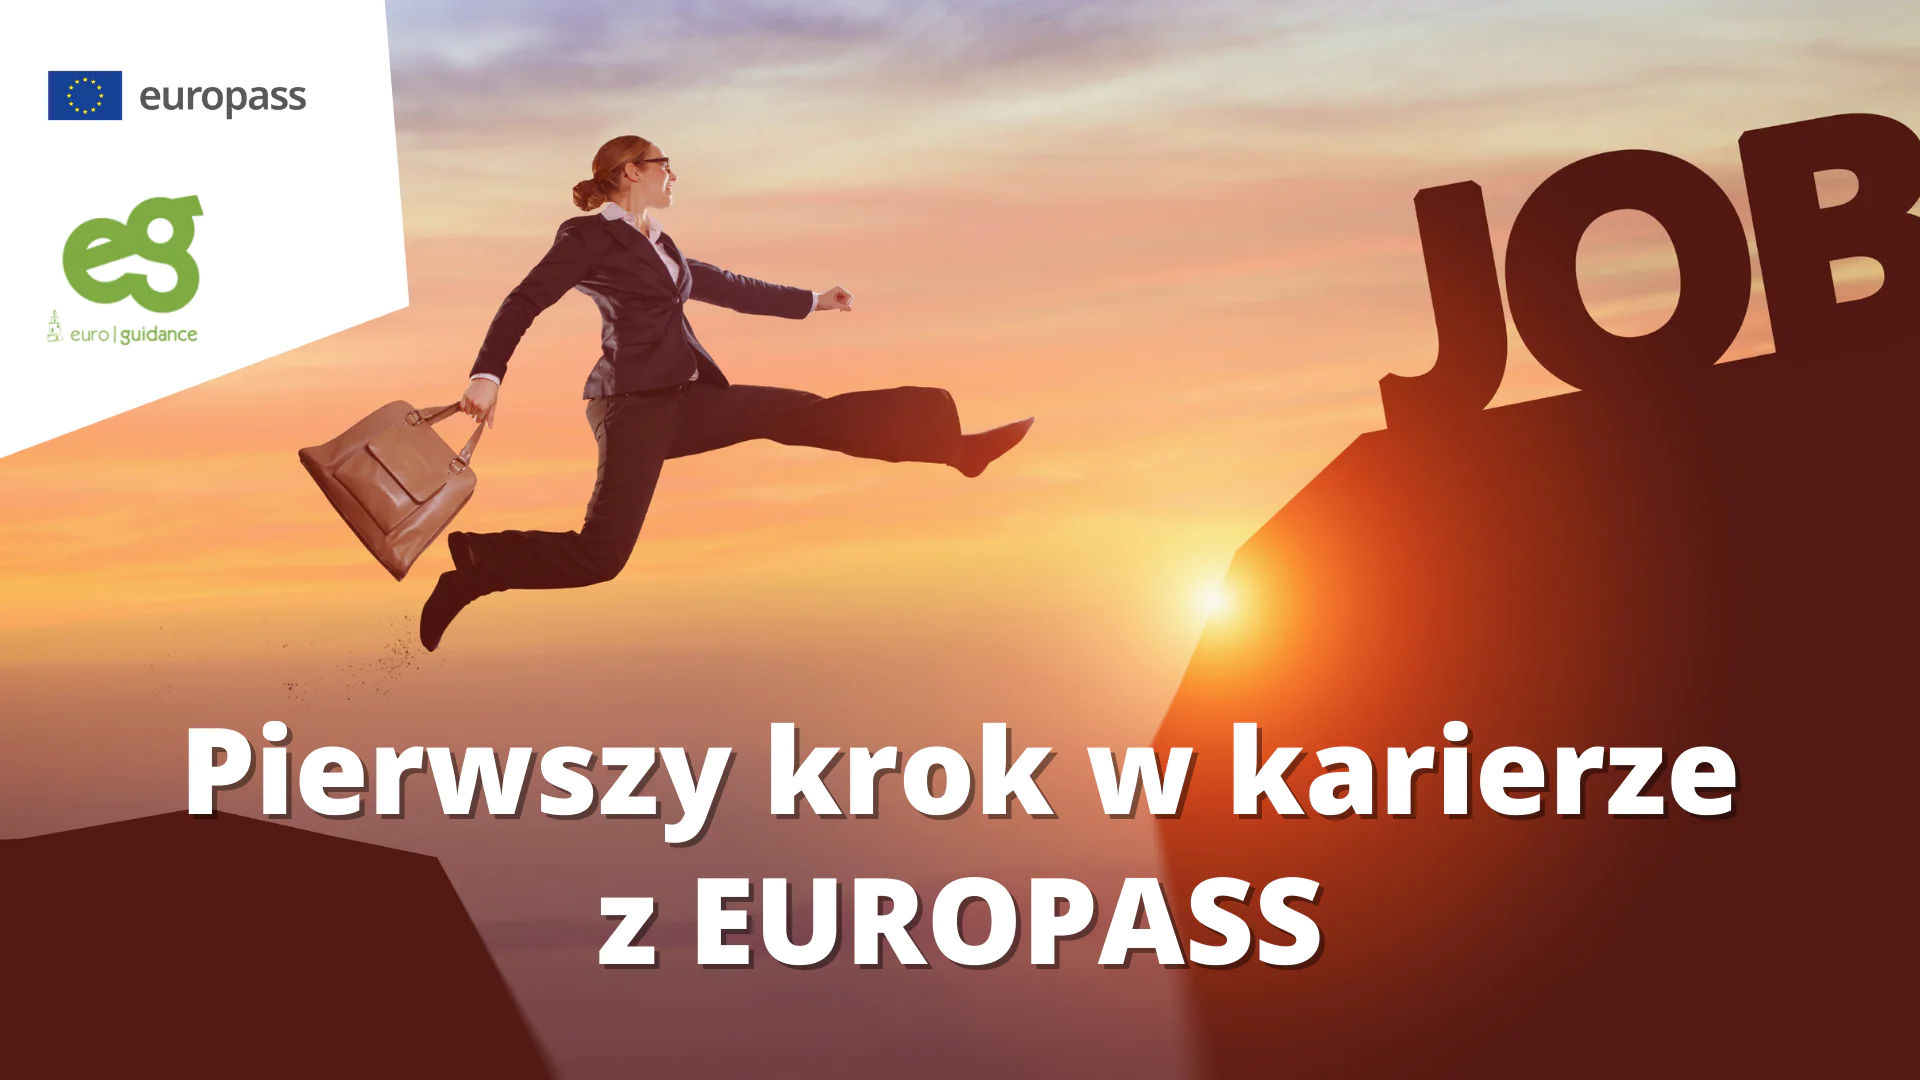 europass""